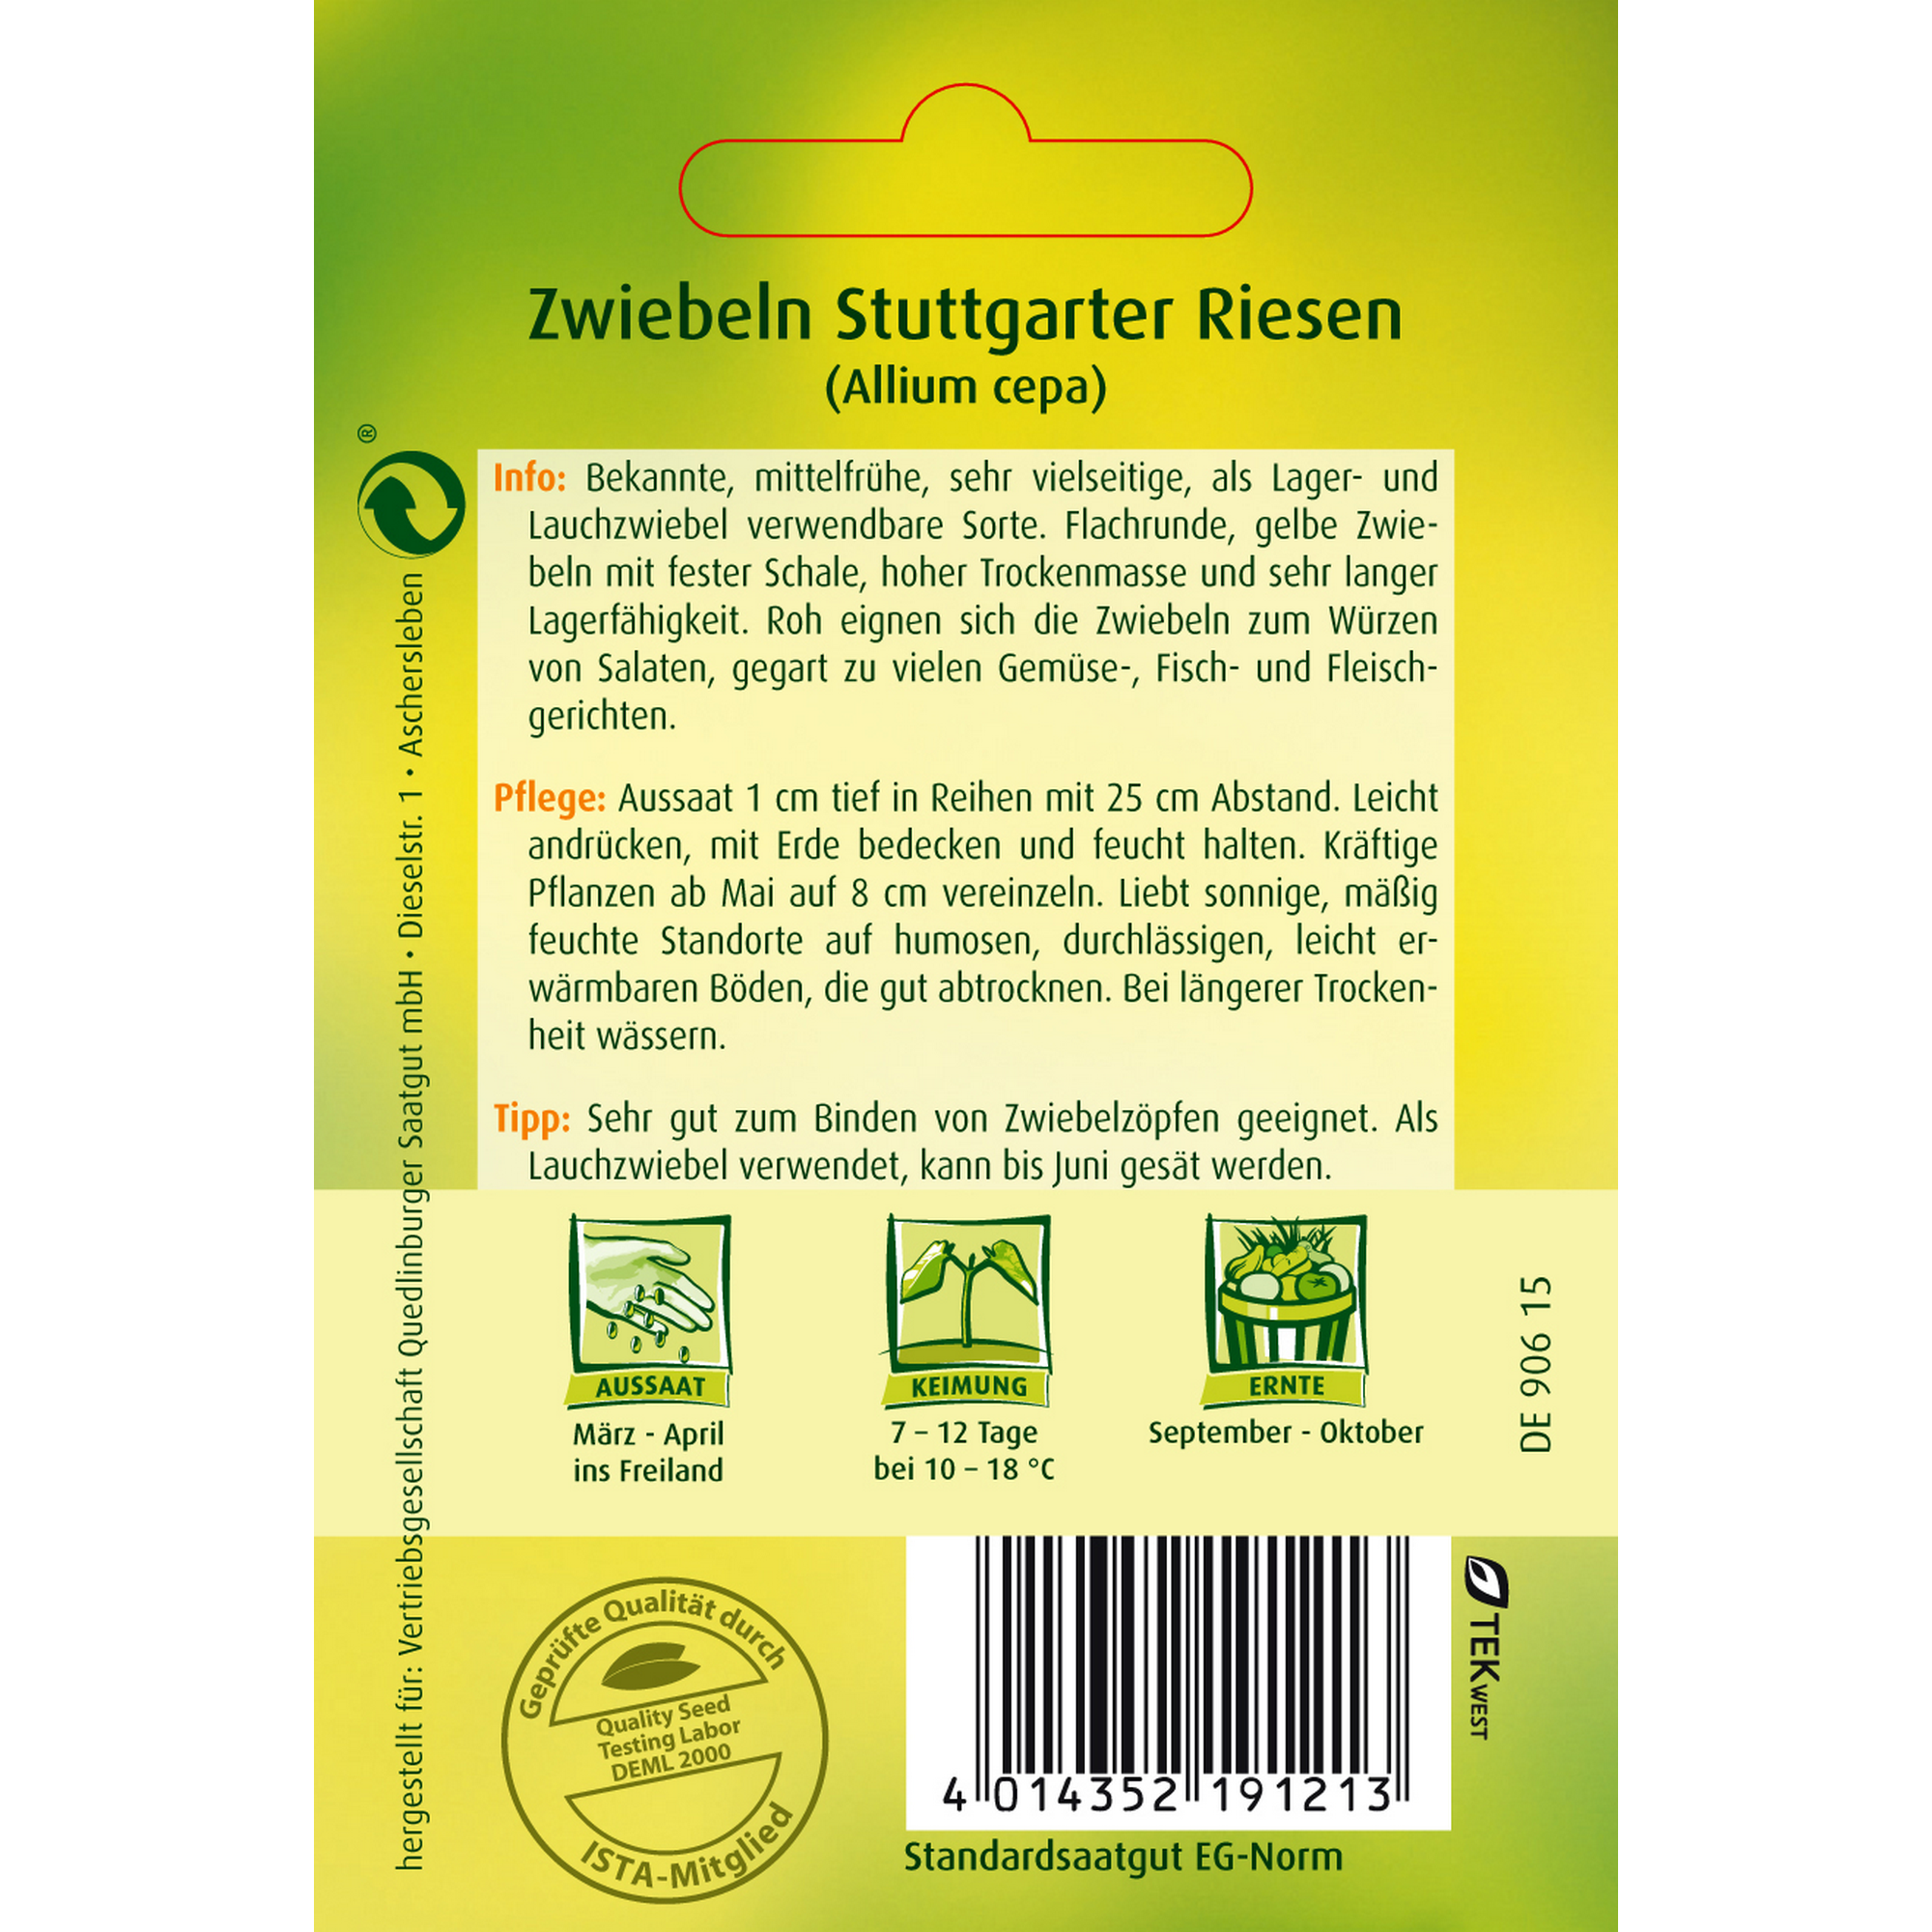 Zwiebel 'Stuttgarter Riesen' + product picture